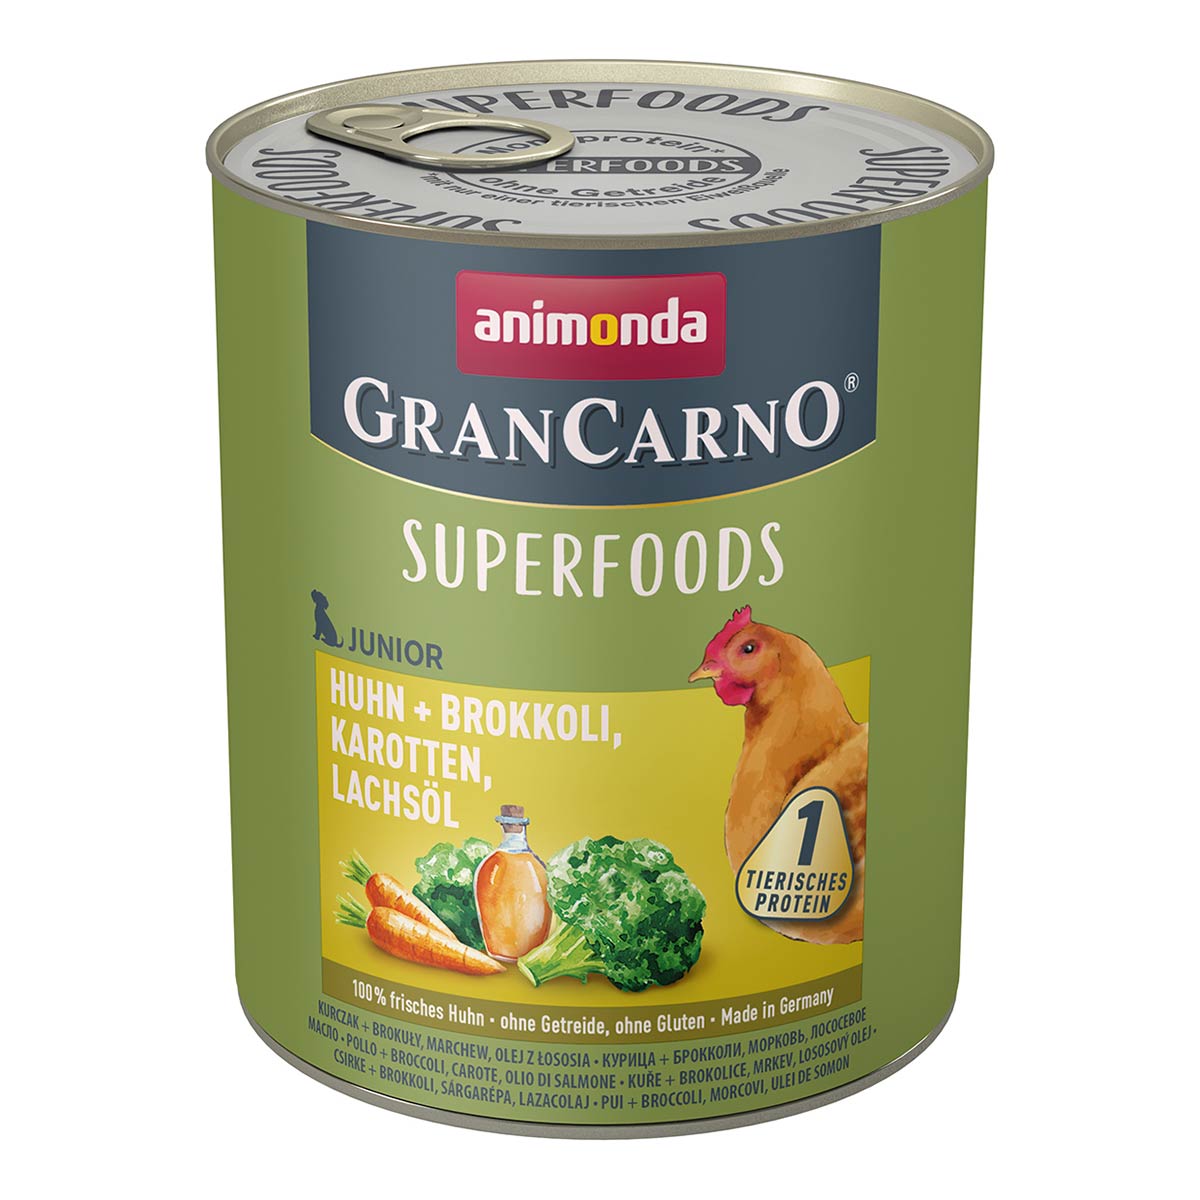 animonda GranCarno superfoods Junior Huhn + Brokkoli, Karotte, Lachsöl 6x800g von animonda GranCarno